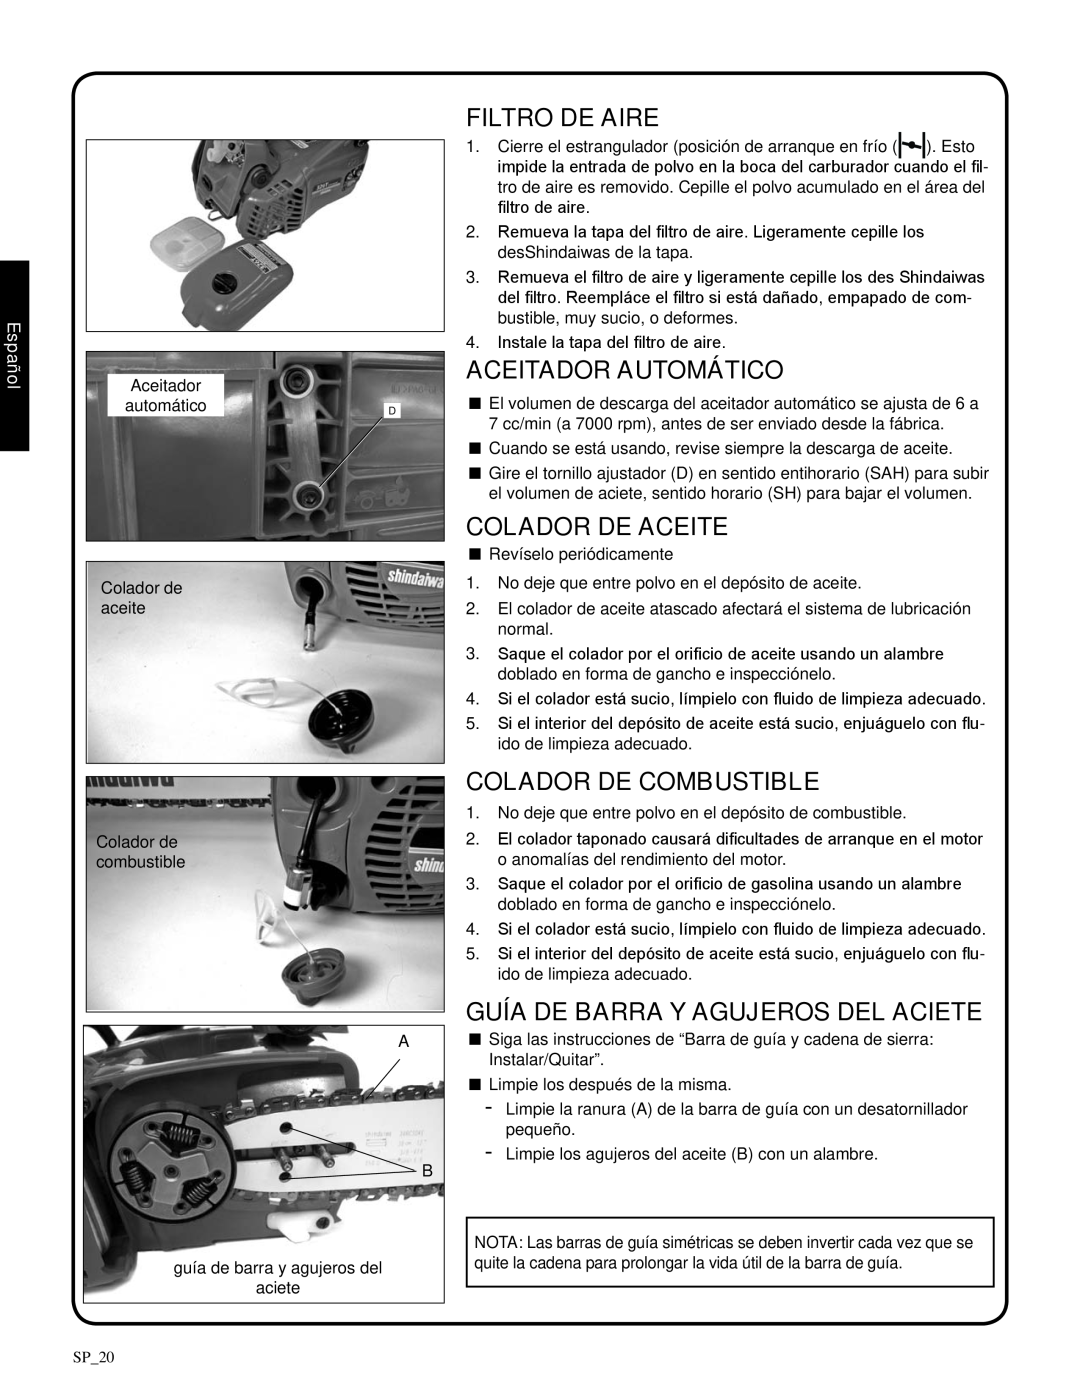 Shindaiwa 82085, 326T manual Filtro de aire, aceitador automático, Colador de aceite, Colador de combustible, Español 